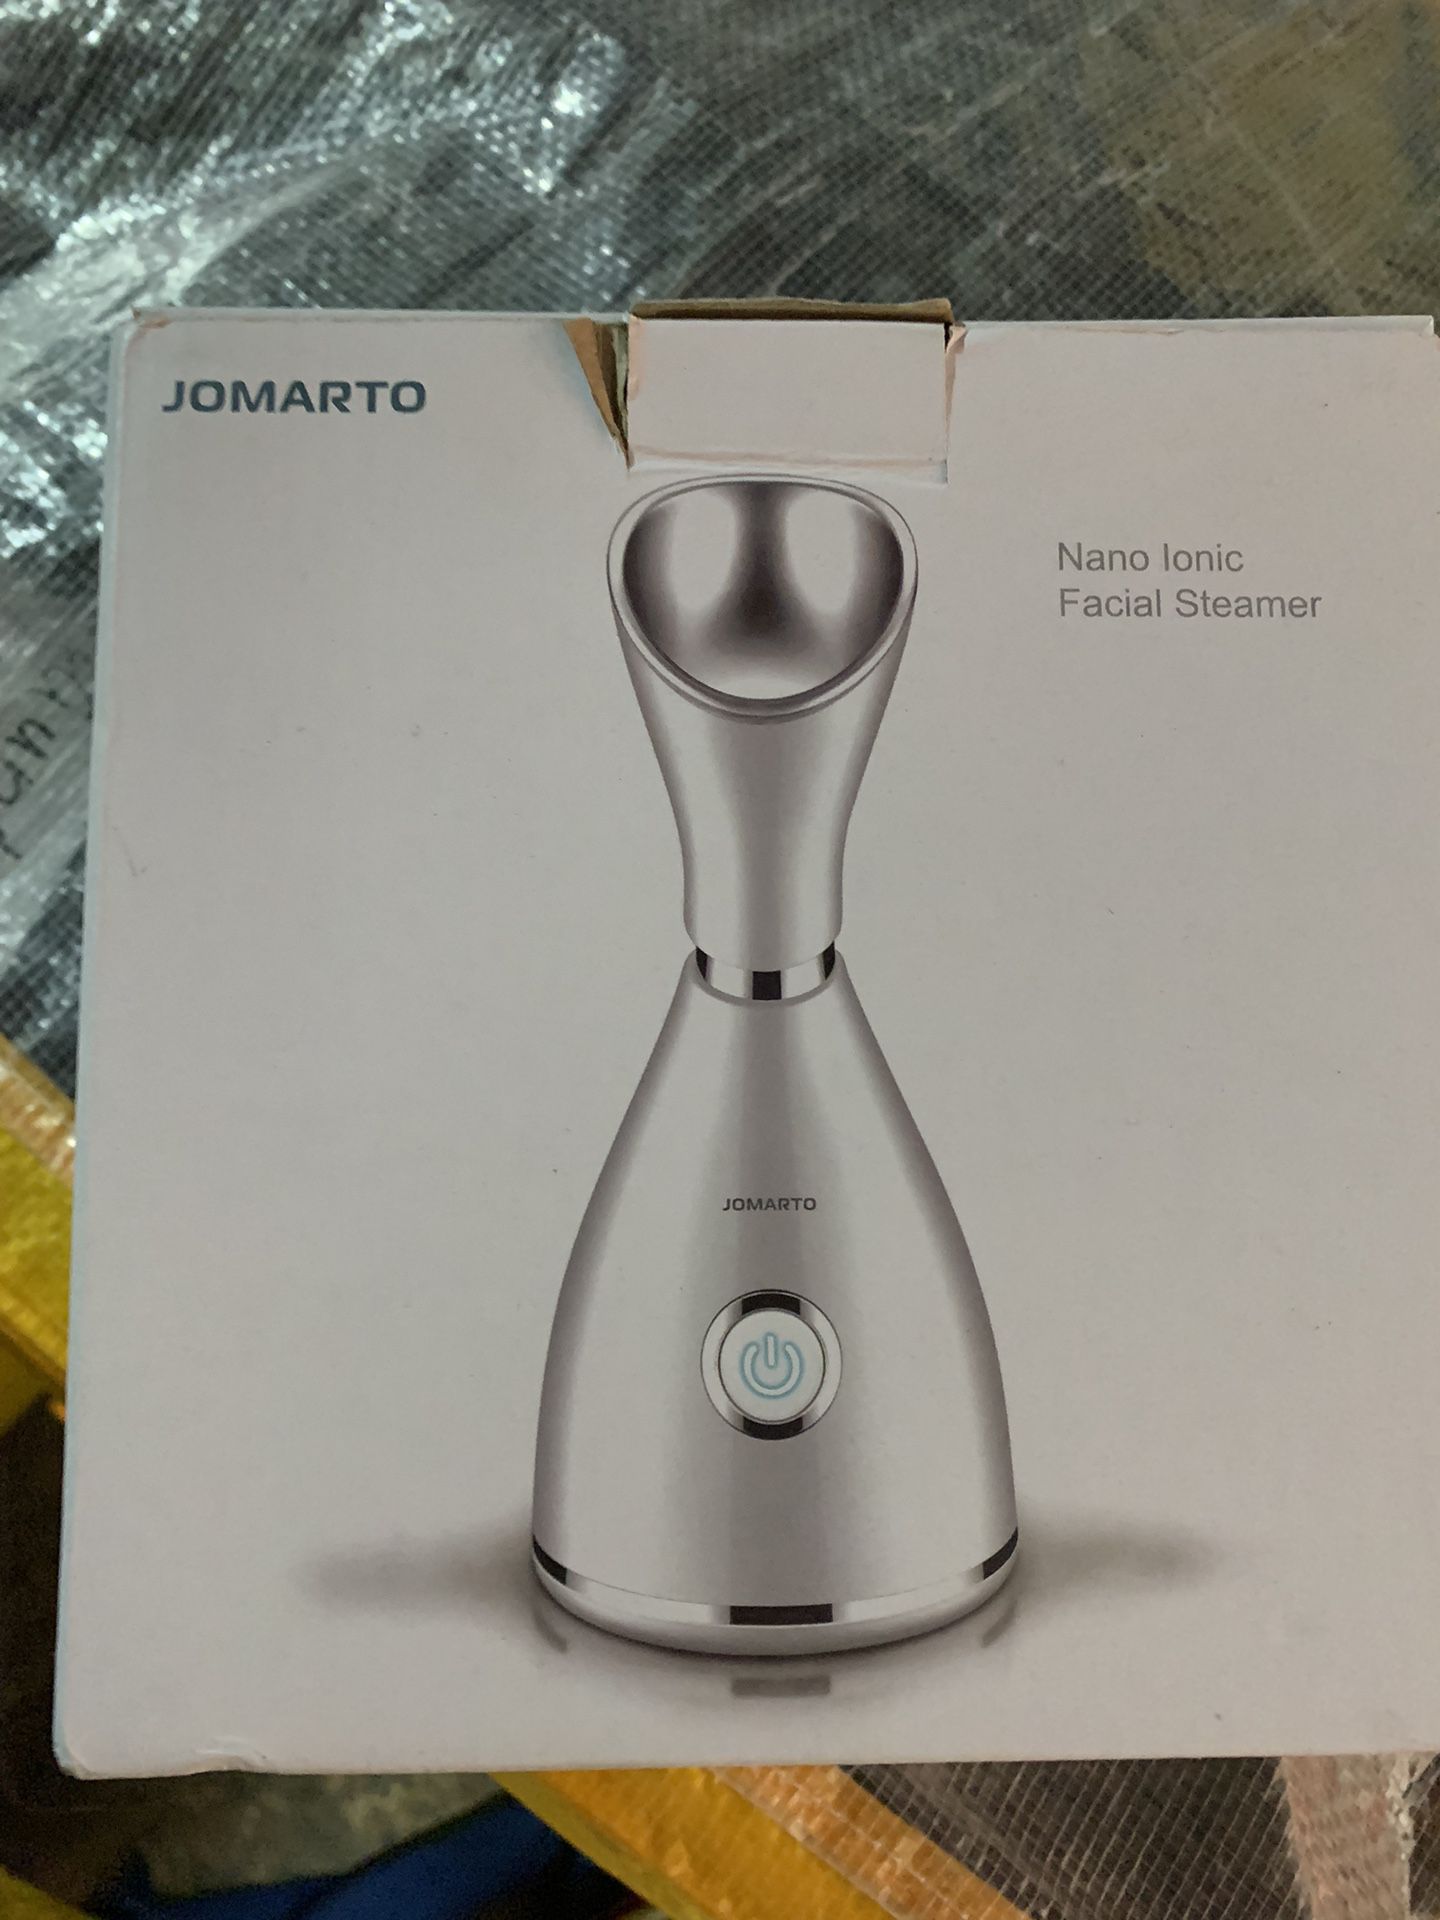 JAMARTO, Nano Ionic Facial Steamer